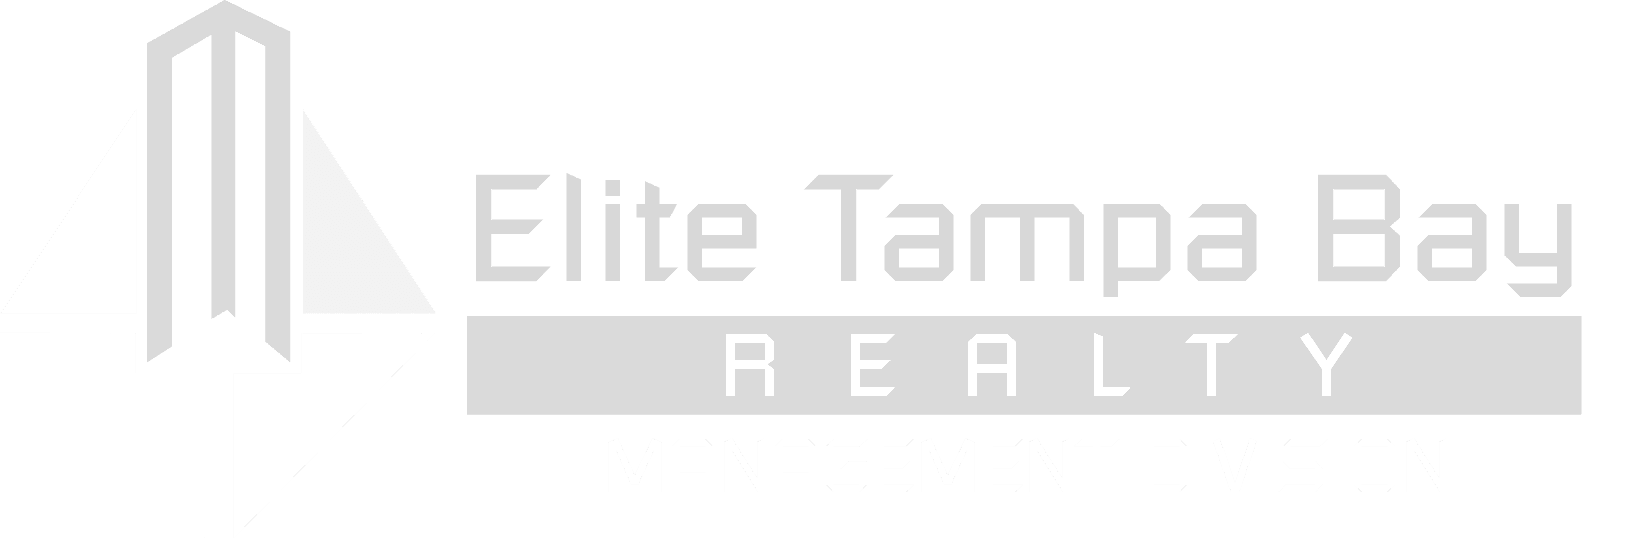 Elite-Management logo white